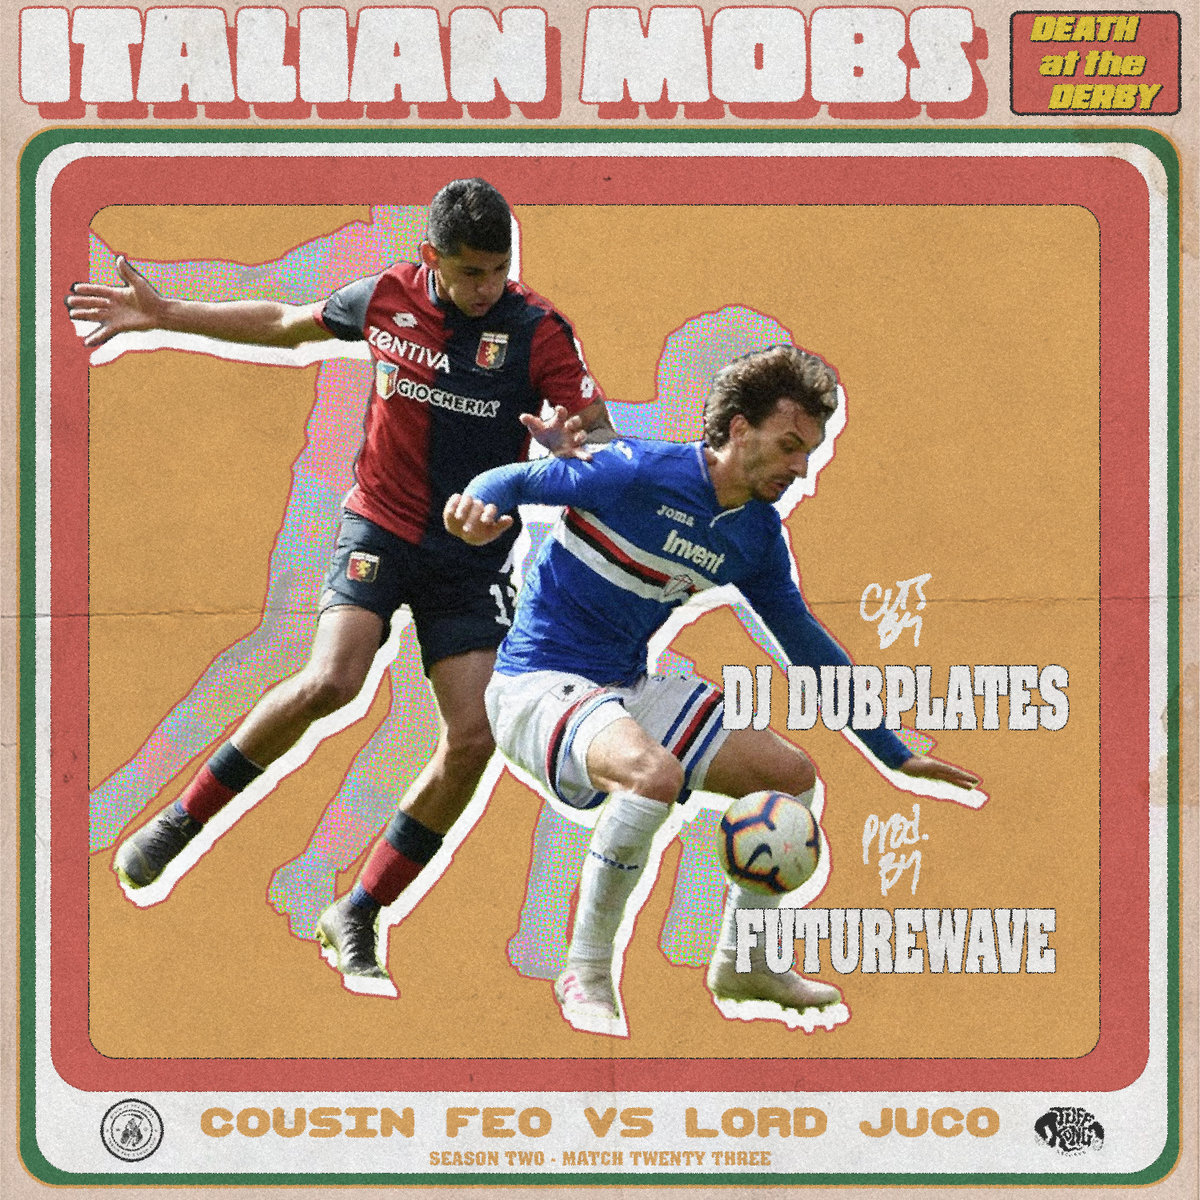 Italian_mobs__prod._futurewave__death_at_the_derby